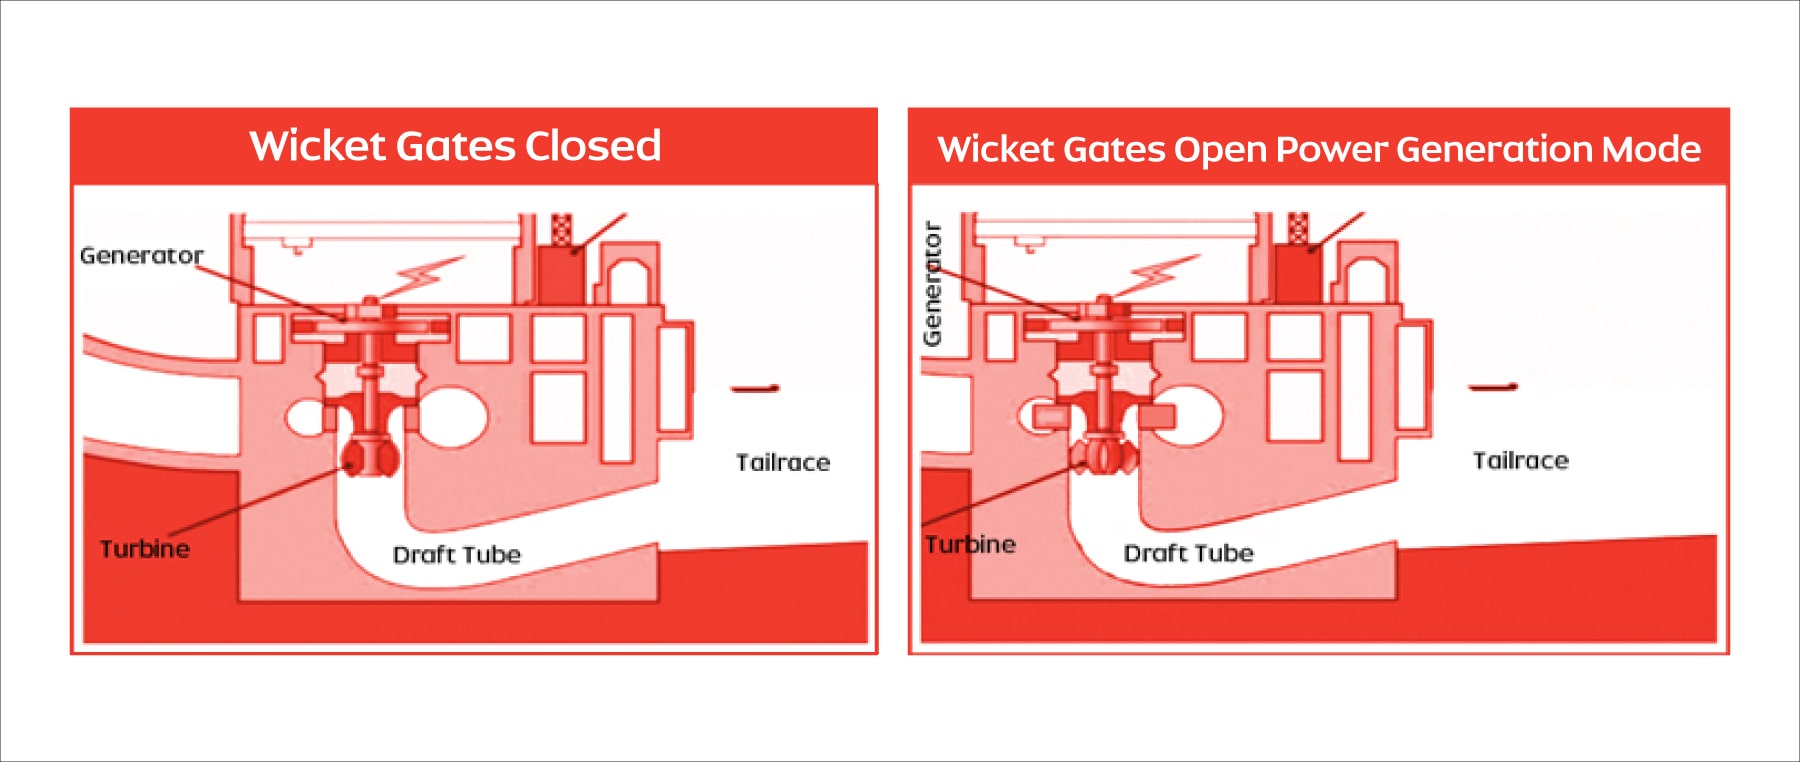 Wicket gates closed - Wicket gates open power generation mode